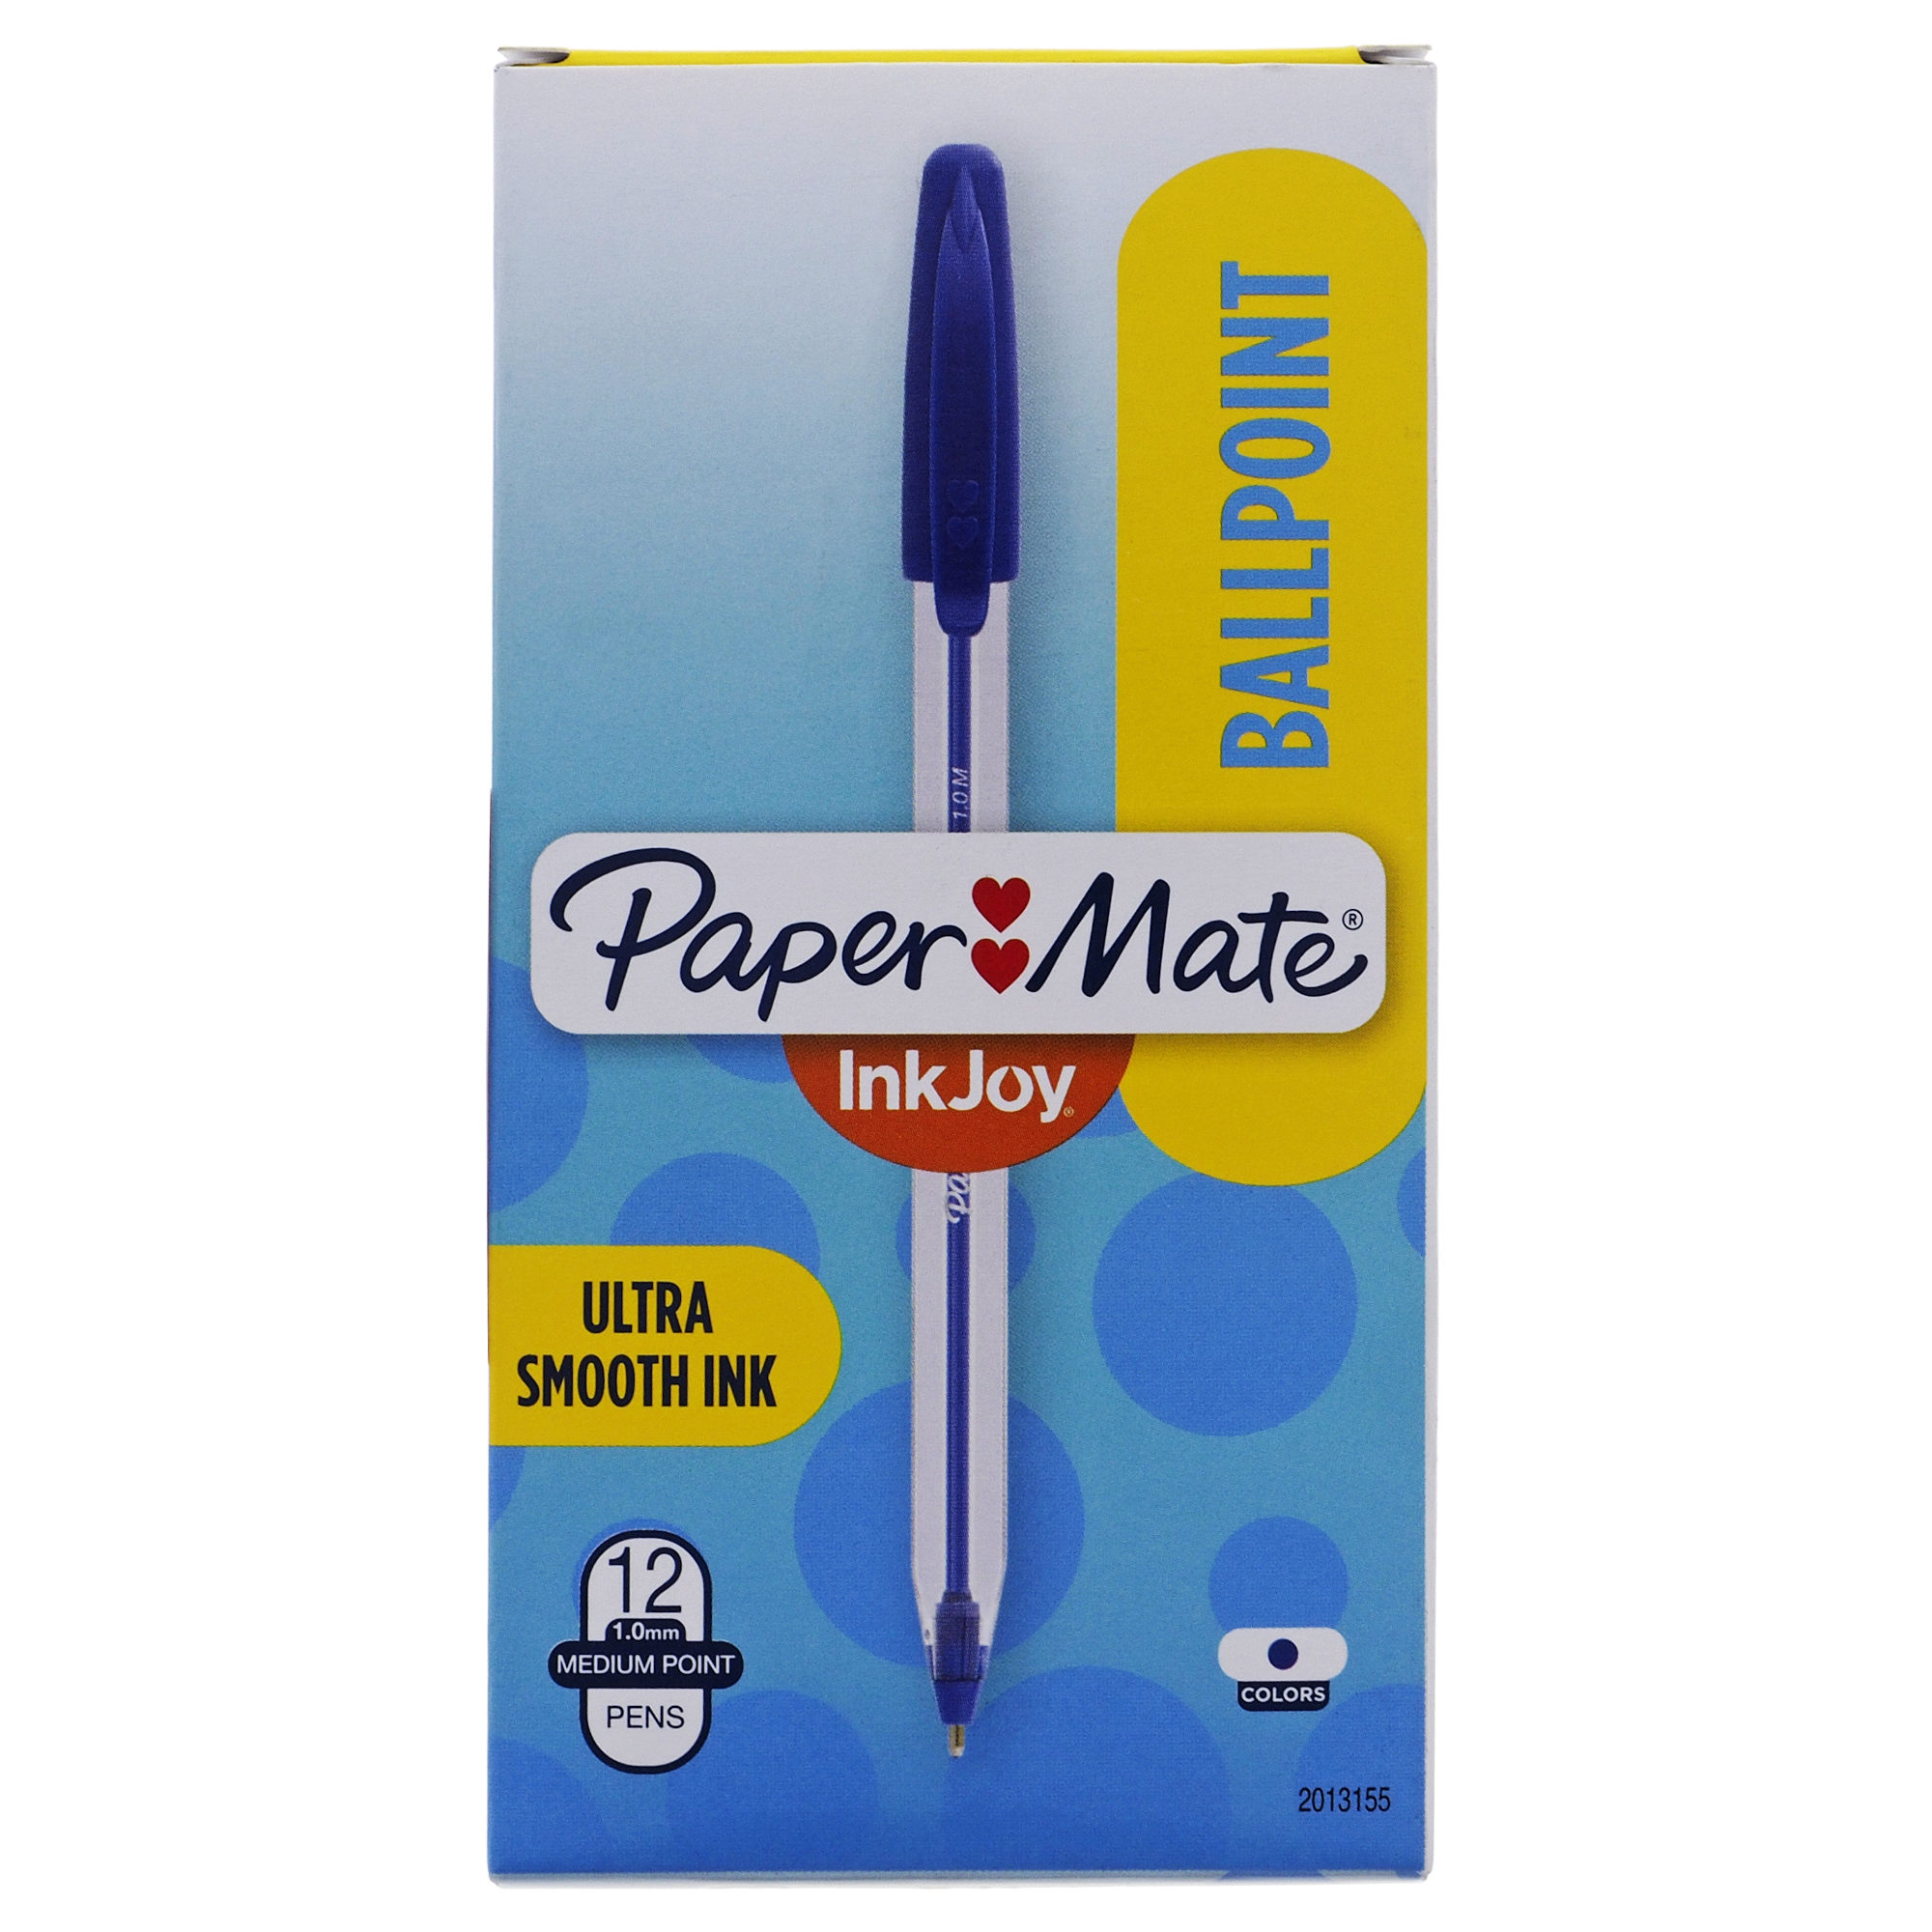 paper mate ballpoint pens